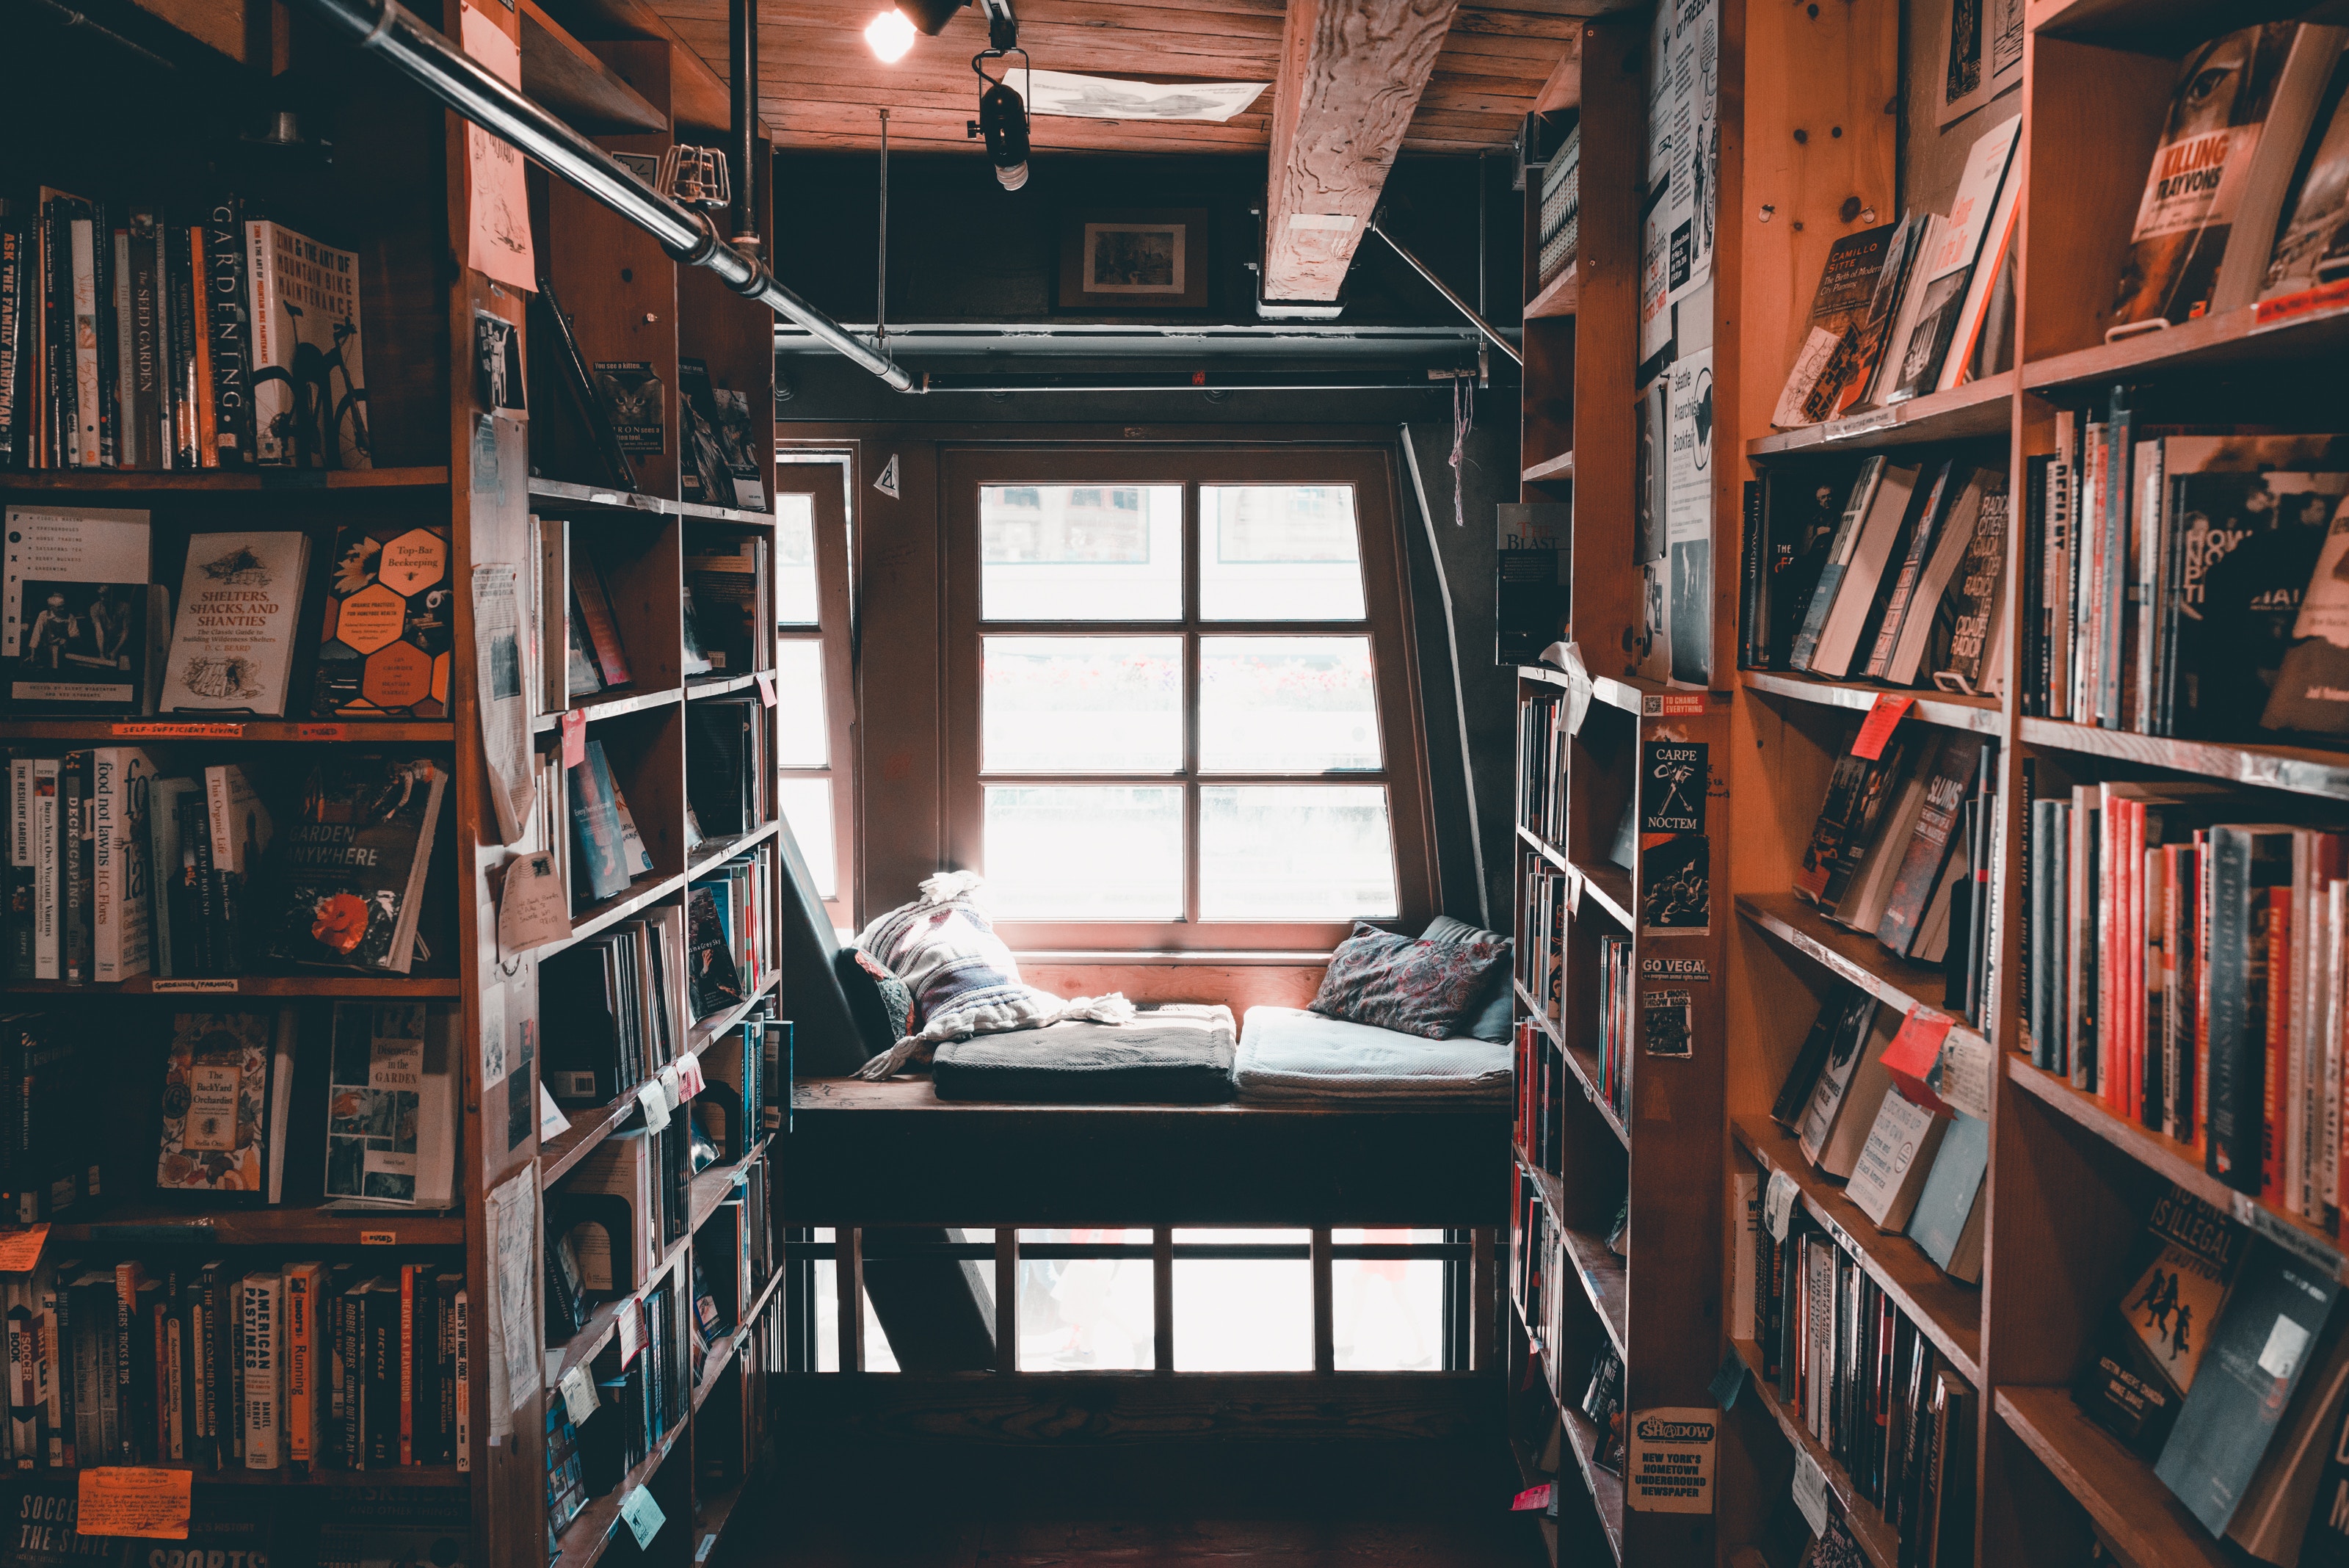 Free HD comfort, library, books, miscellanea, miscellaneous, coziness, reading, shelves